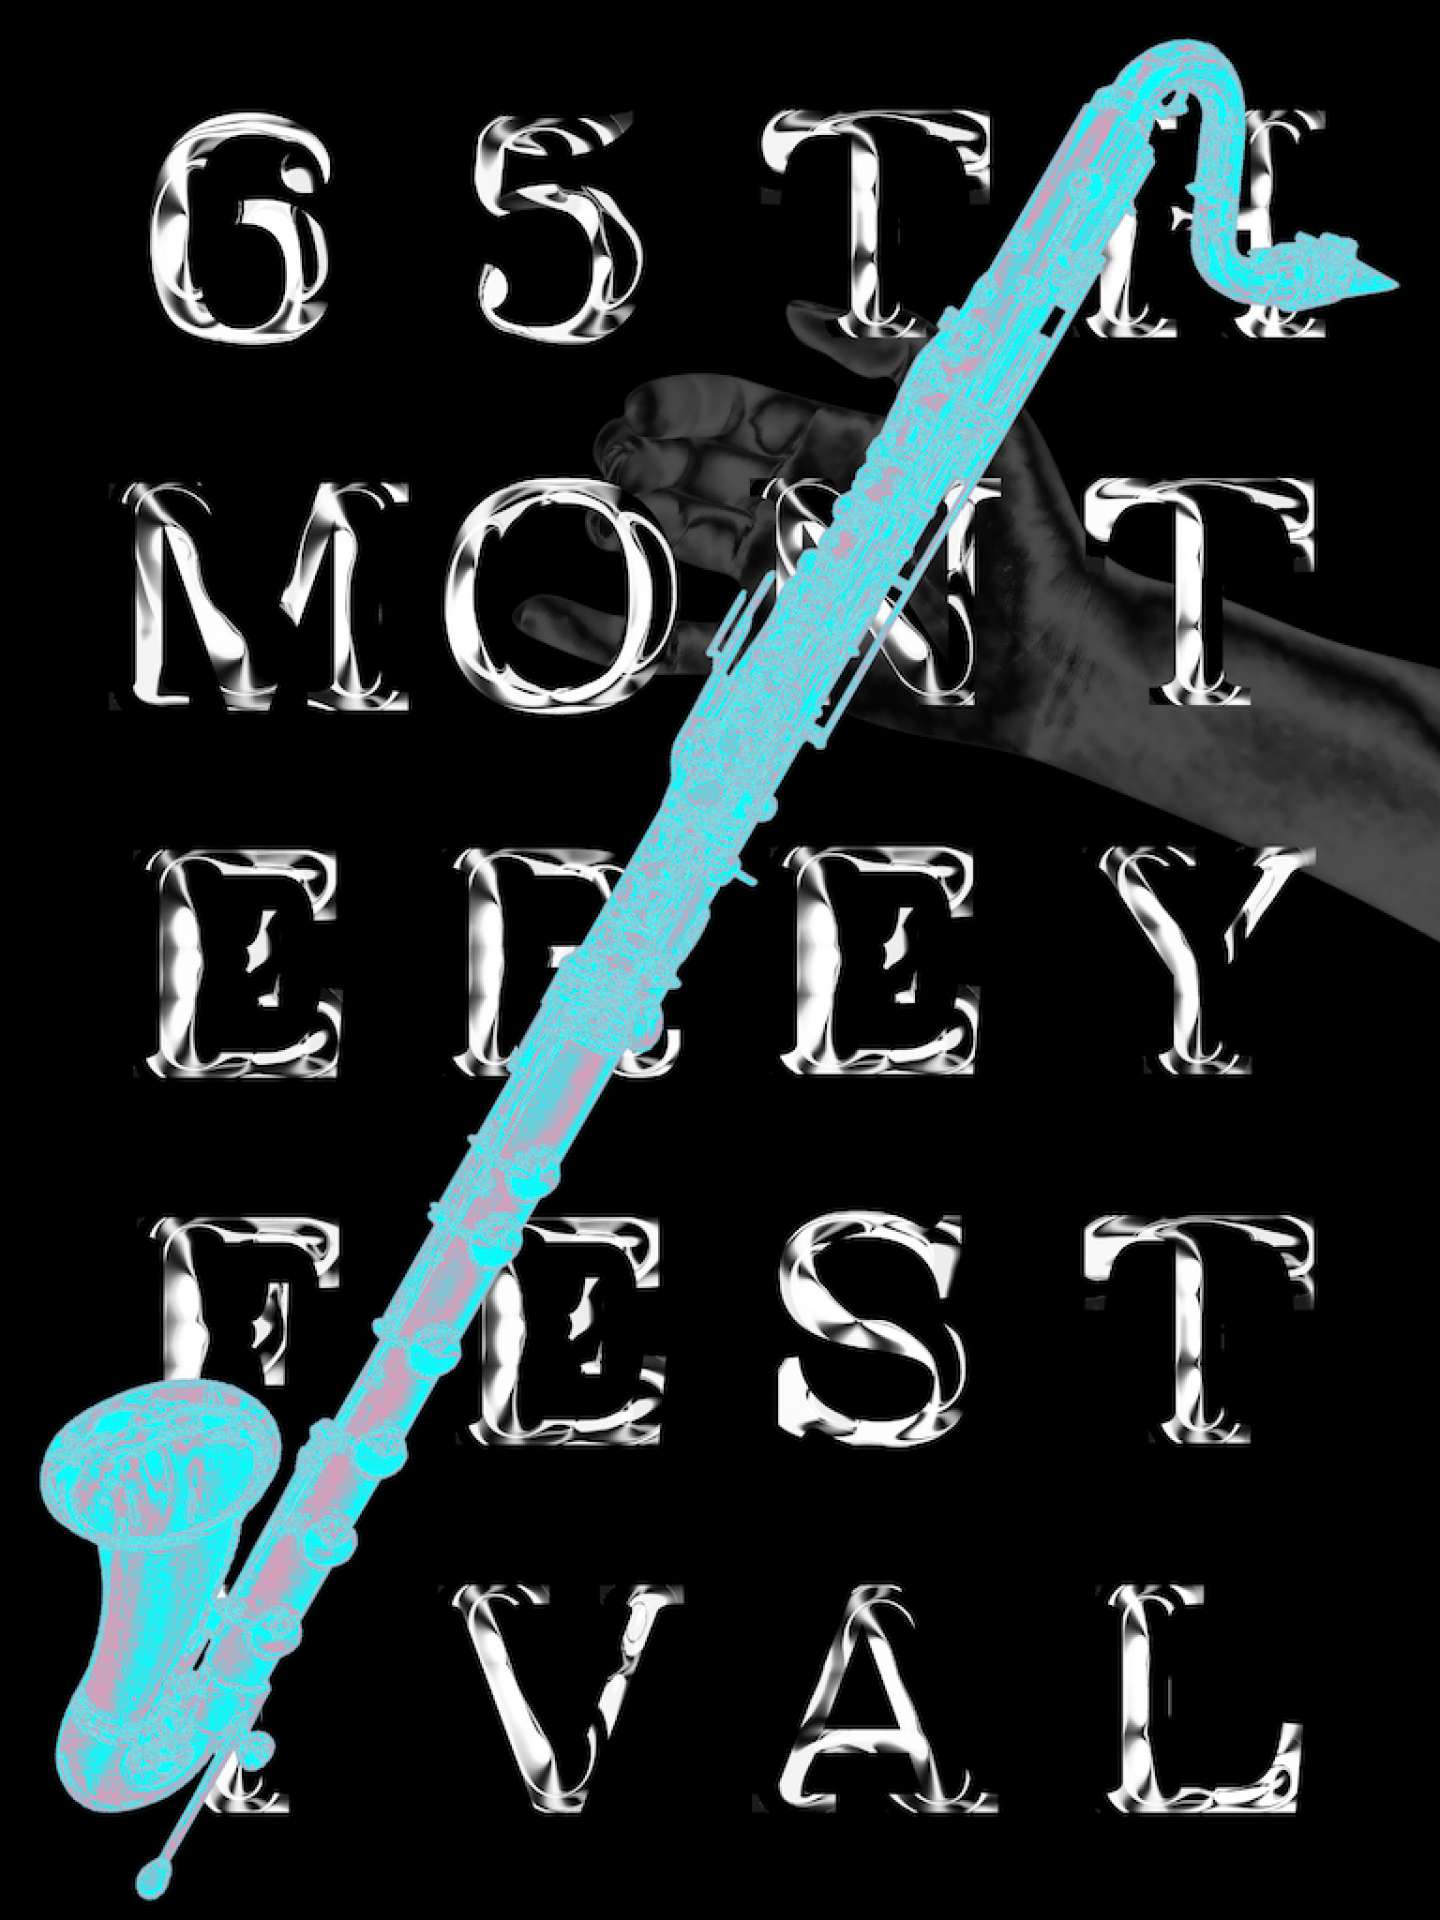 The 65th Monterey Jazz Festival